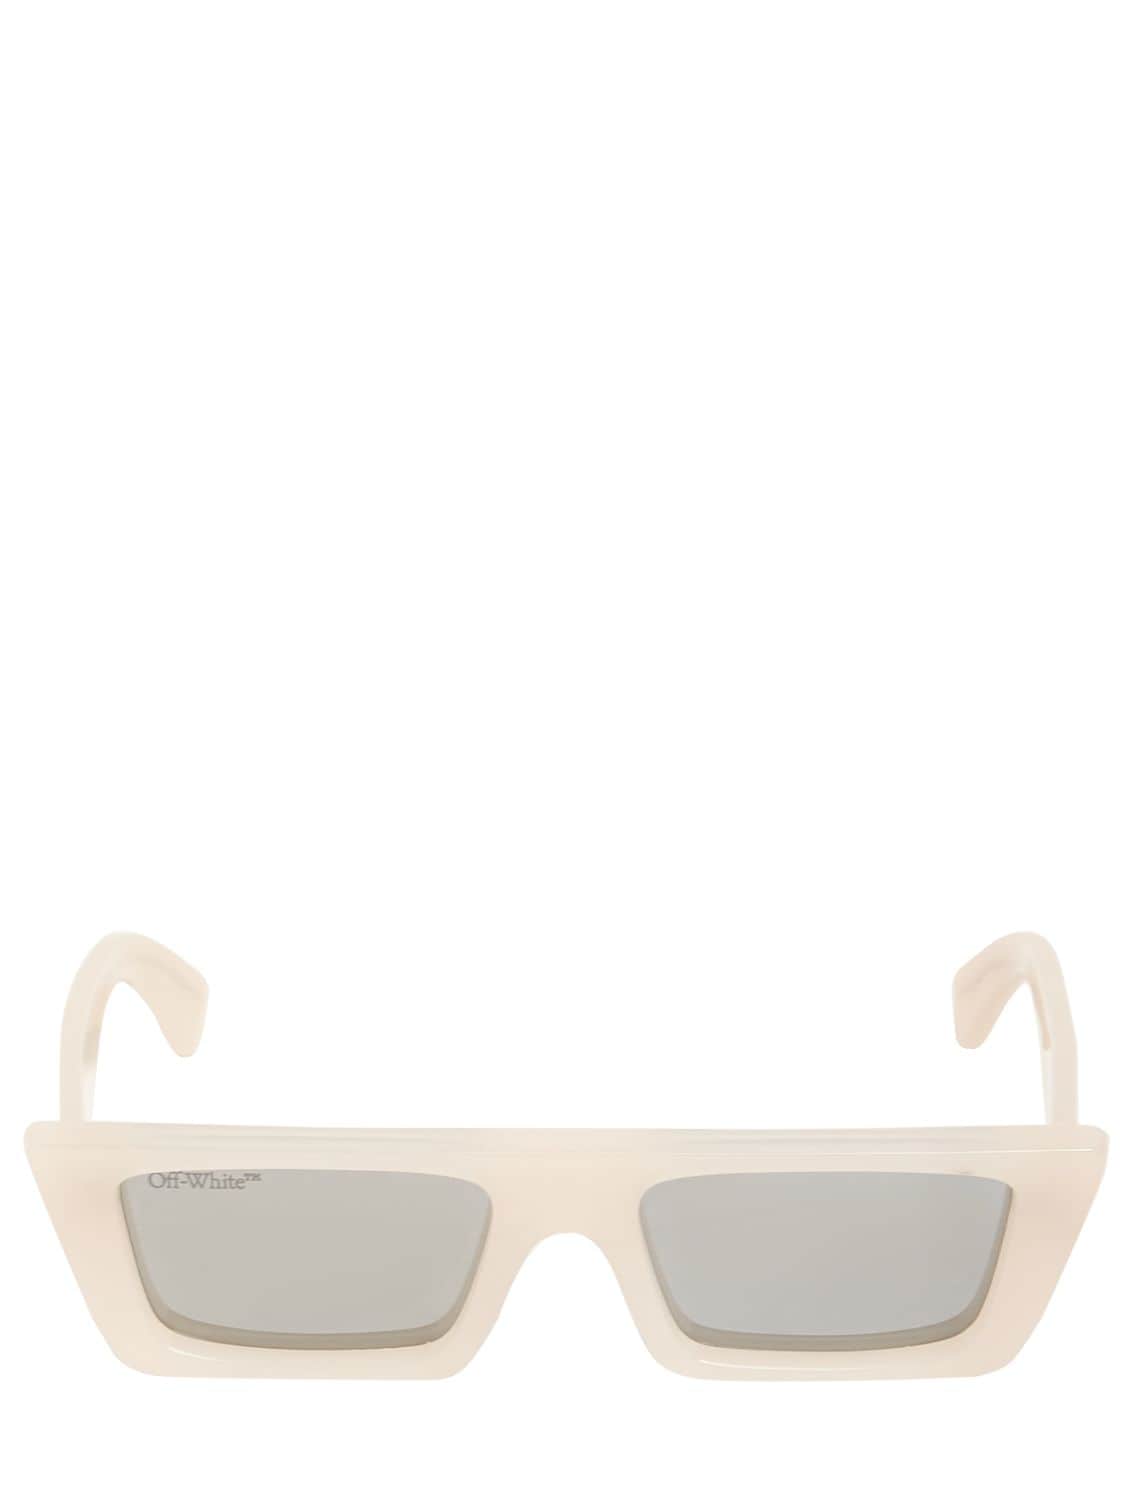 Off-White Manchester Sunglasses